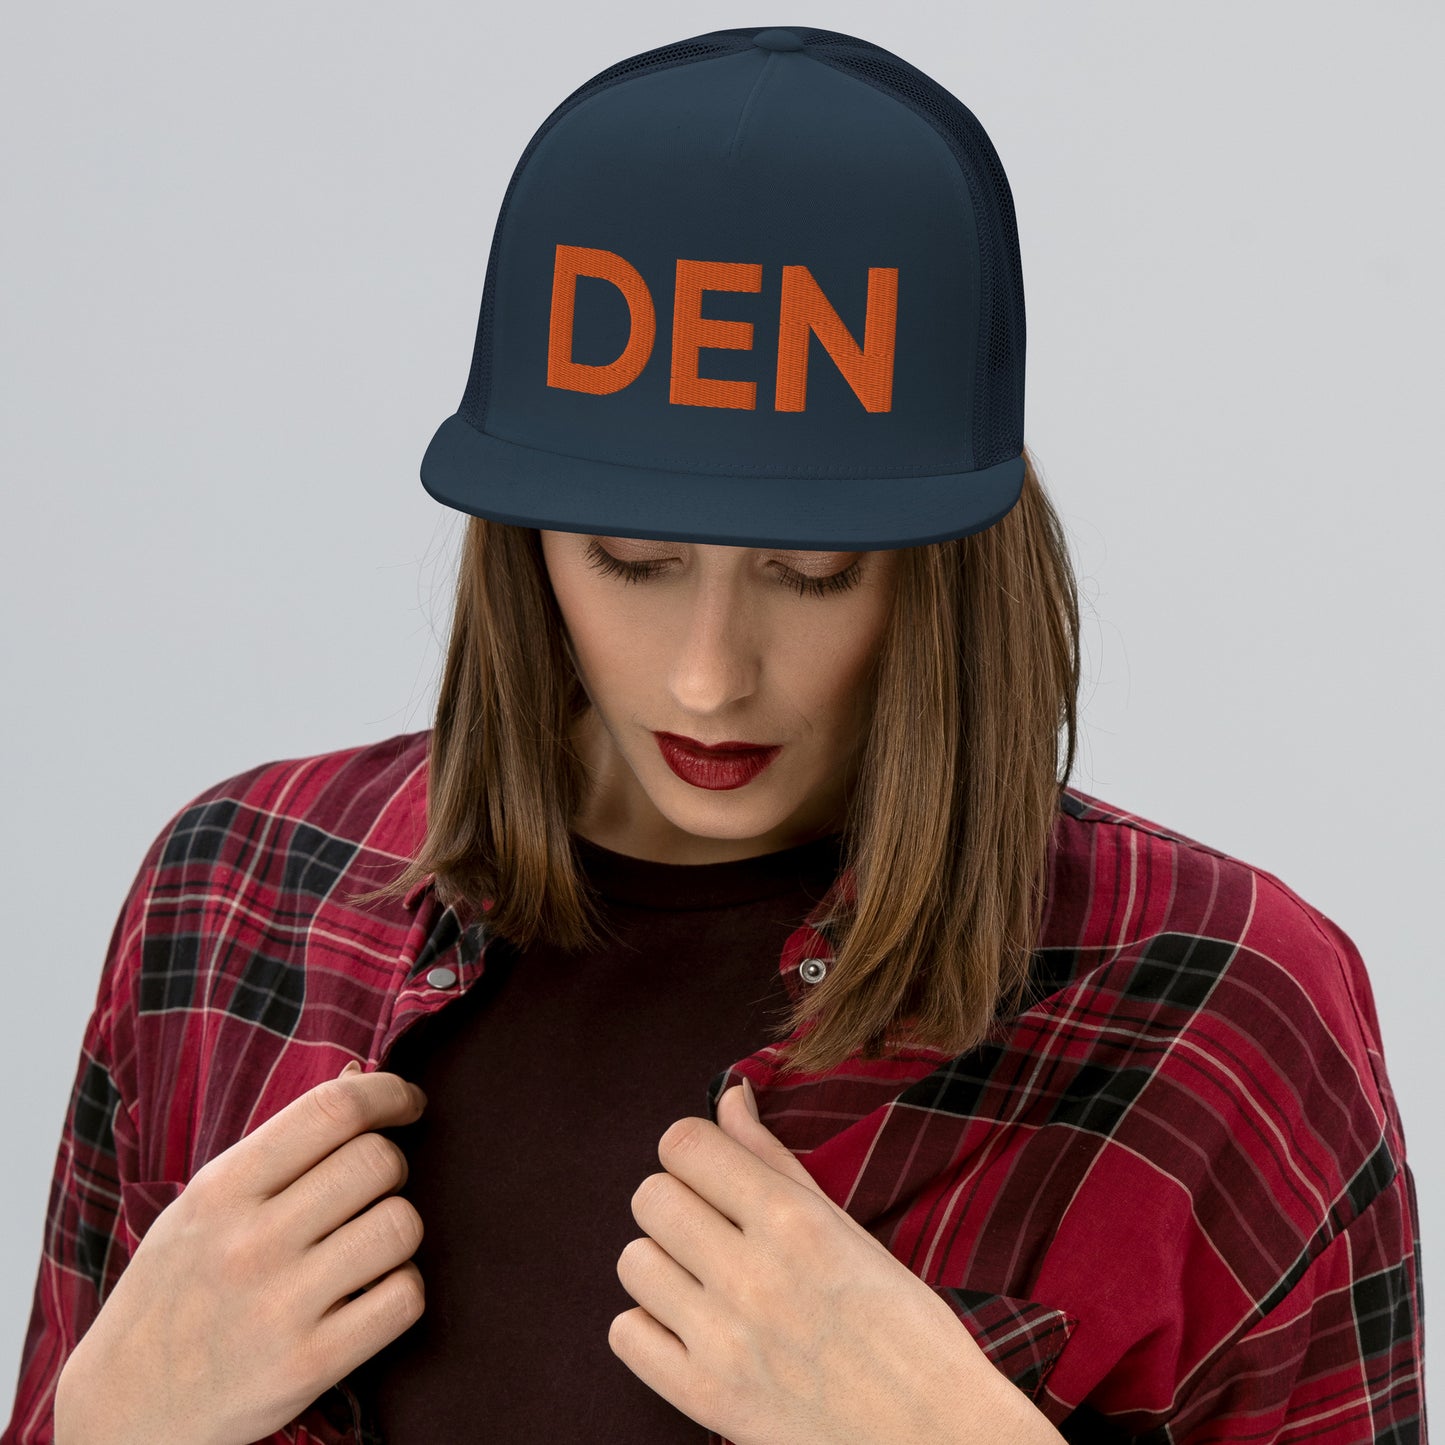 DEN Denver Strong Trucker Hat